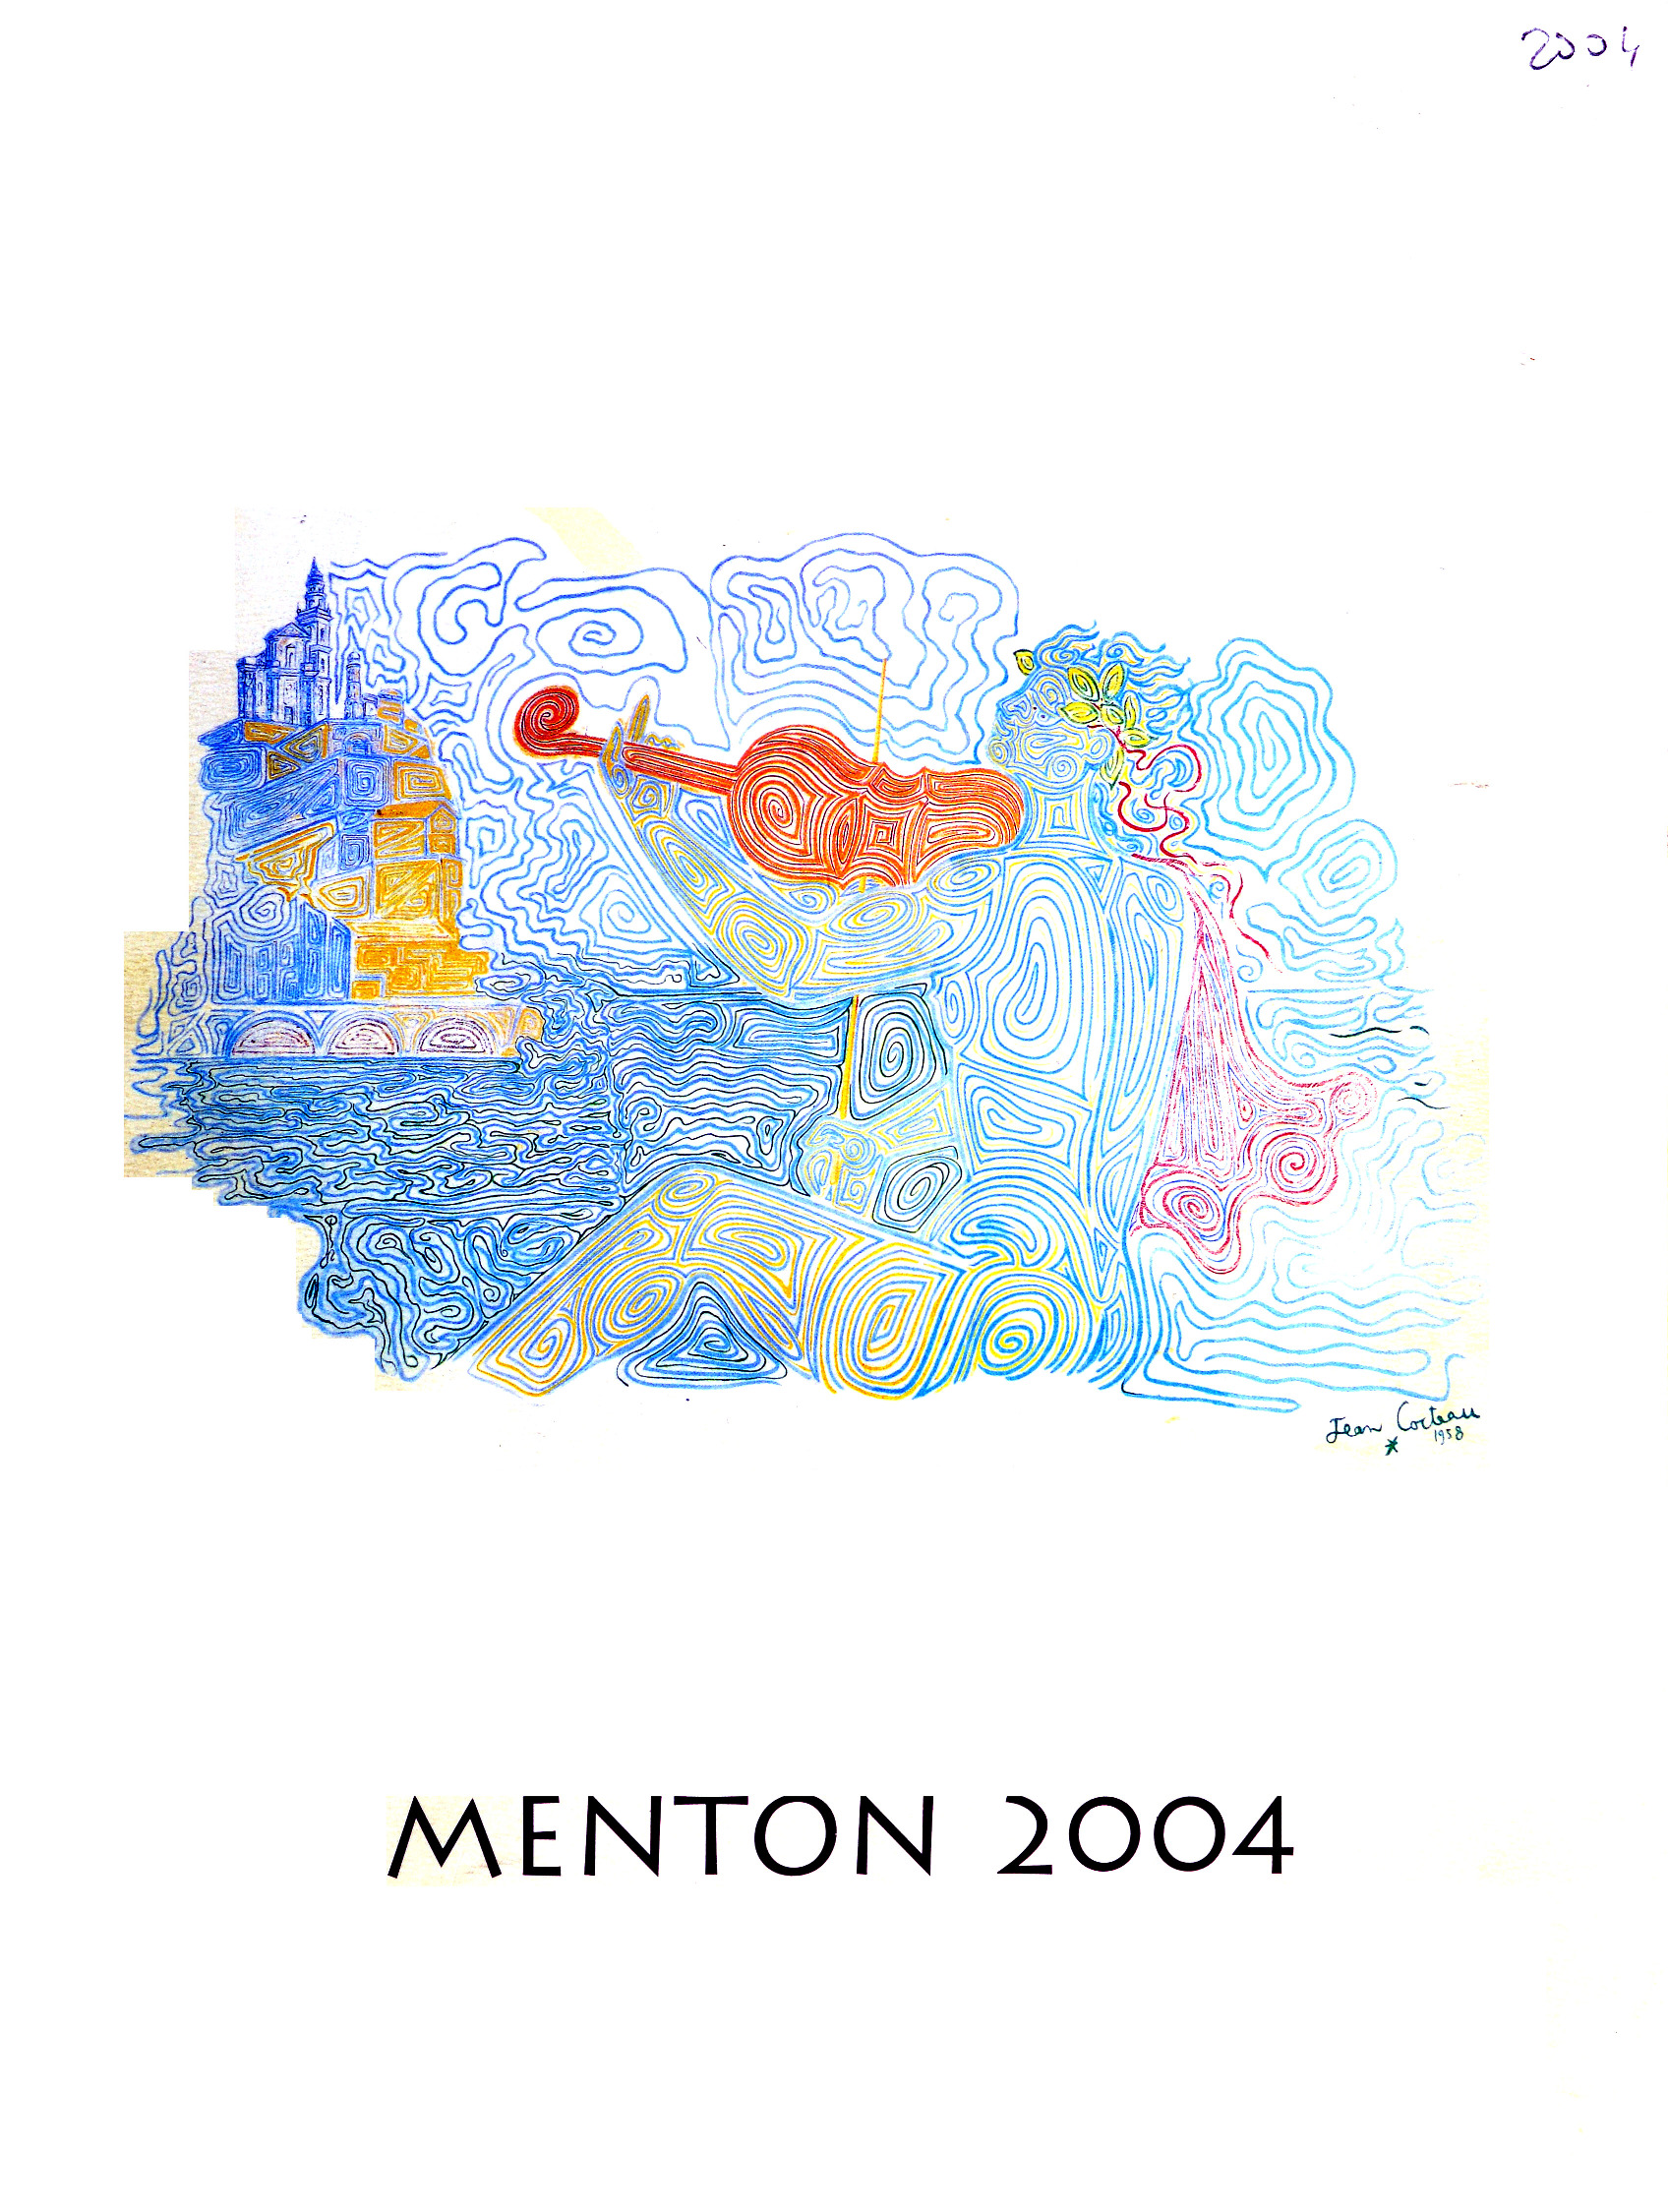 Festival de musique de Menton 2004